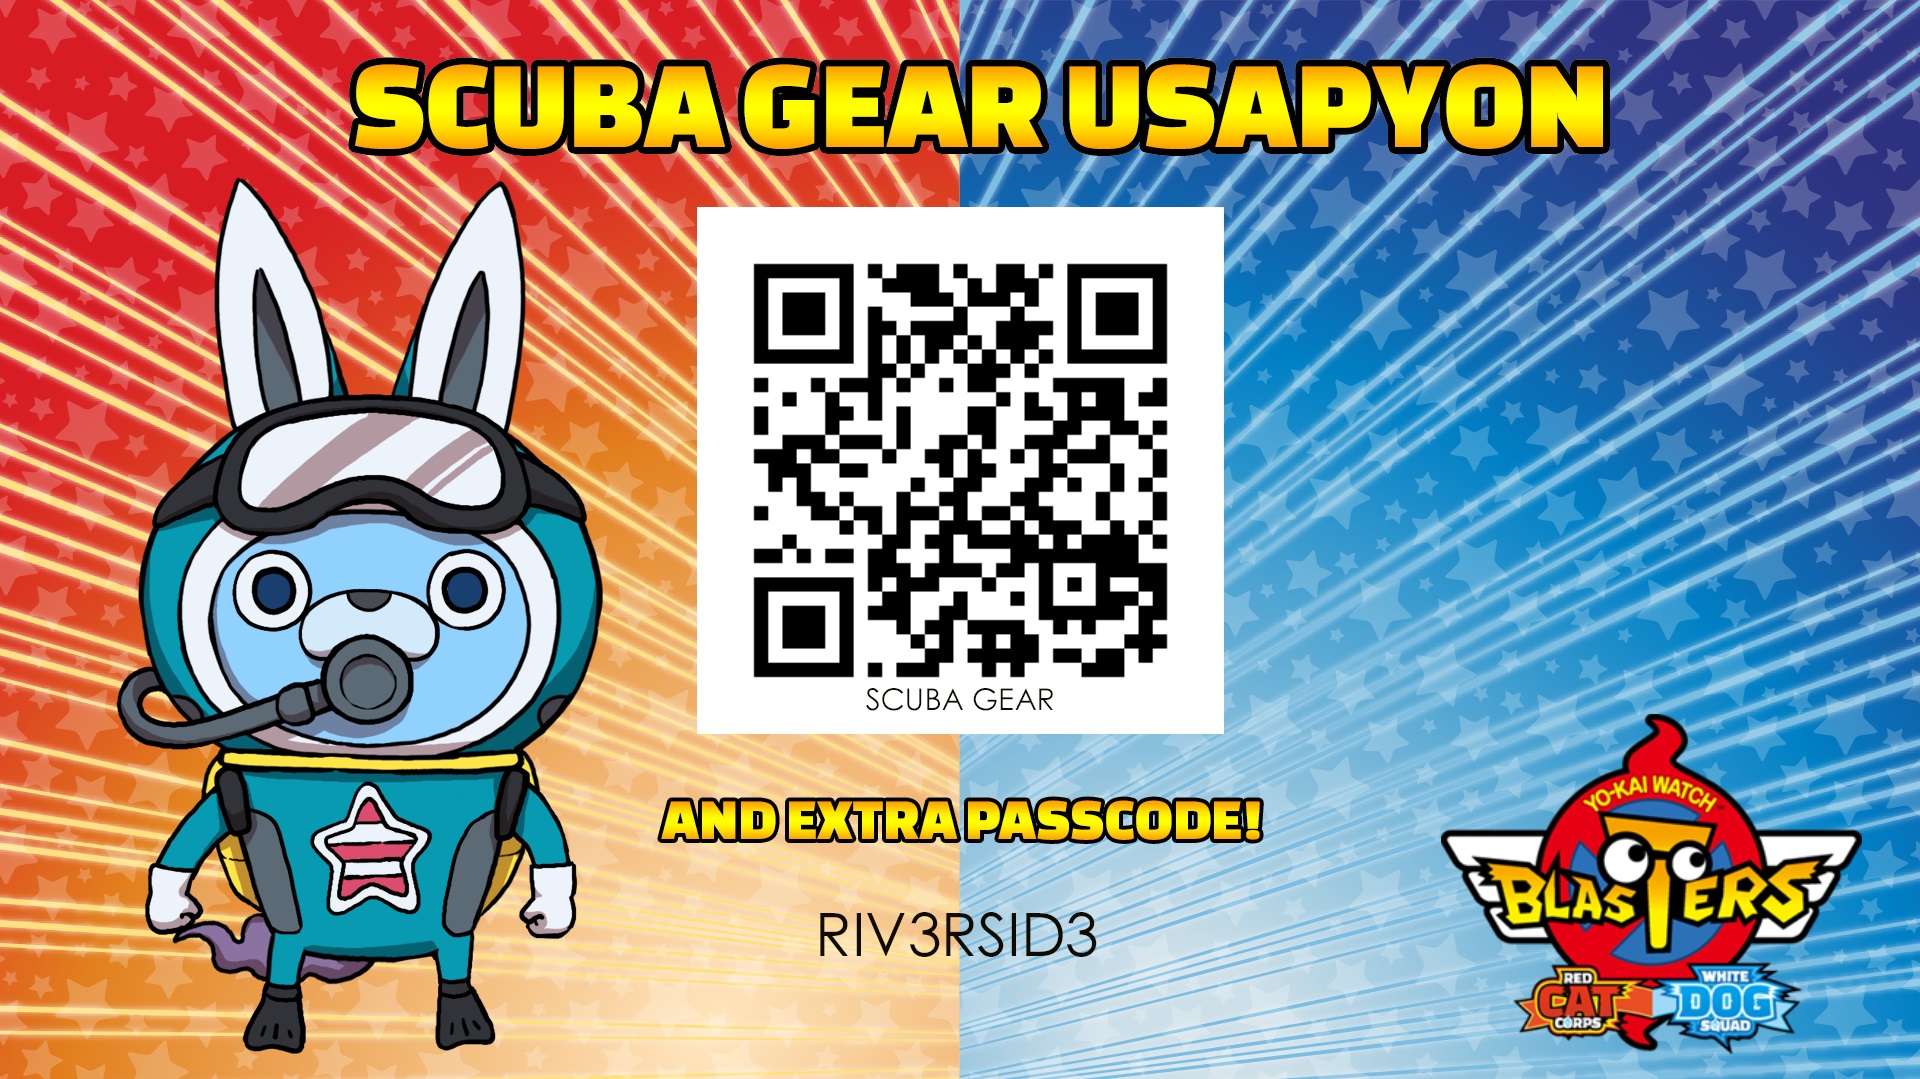 This QR Code allows you to get the Scuba Gear for USApyon.